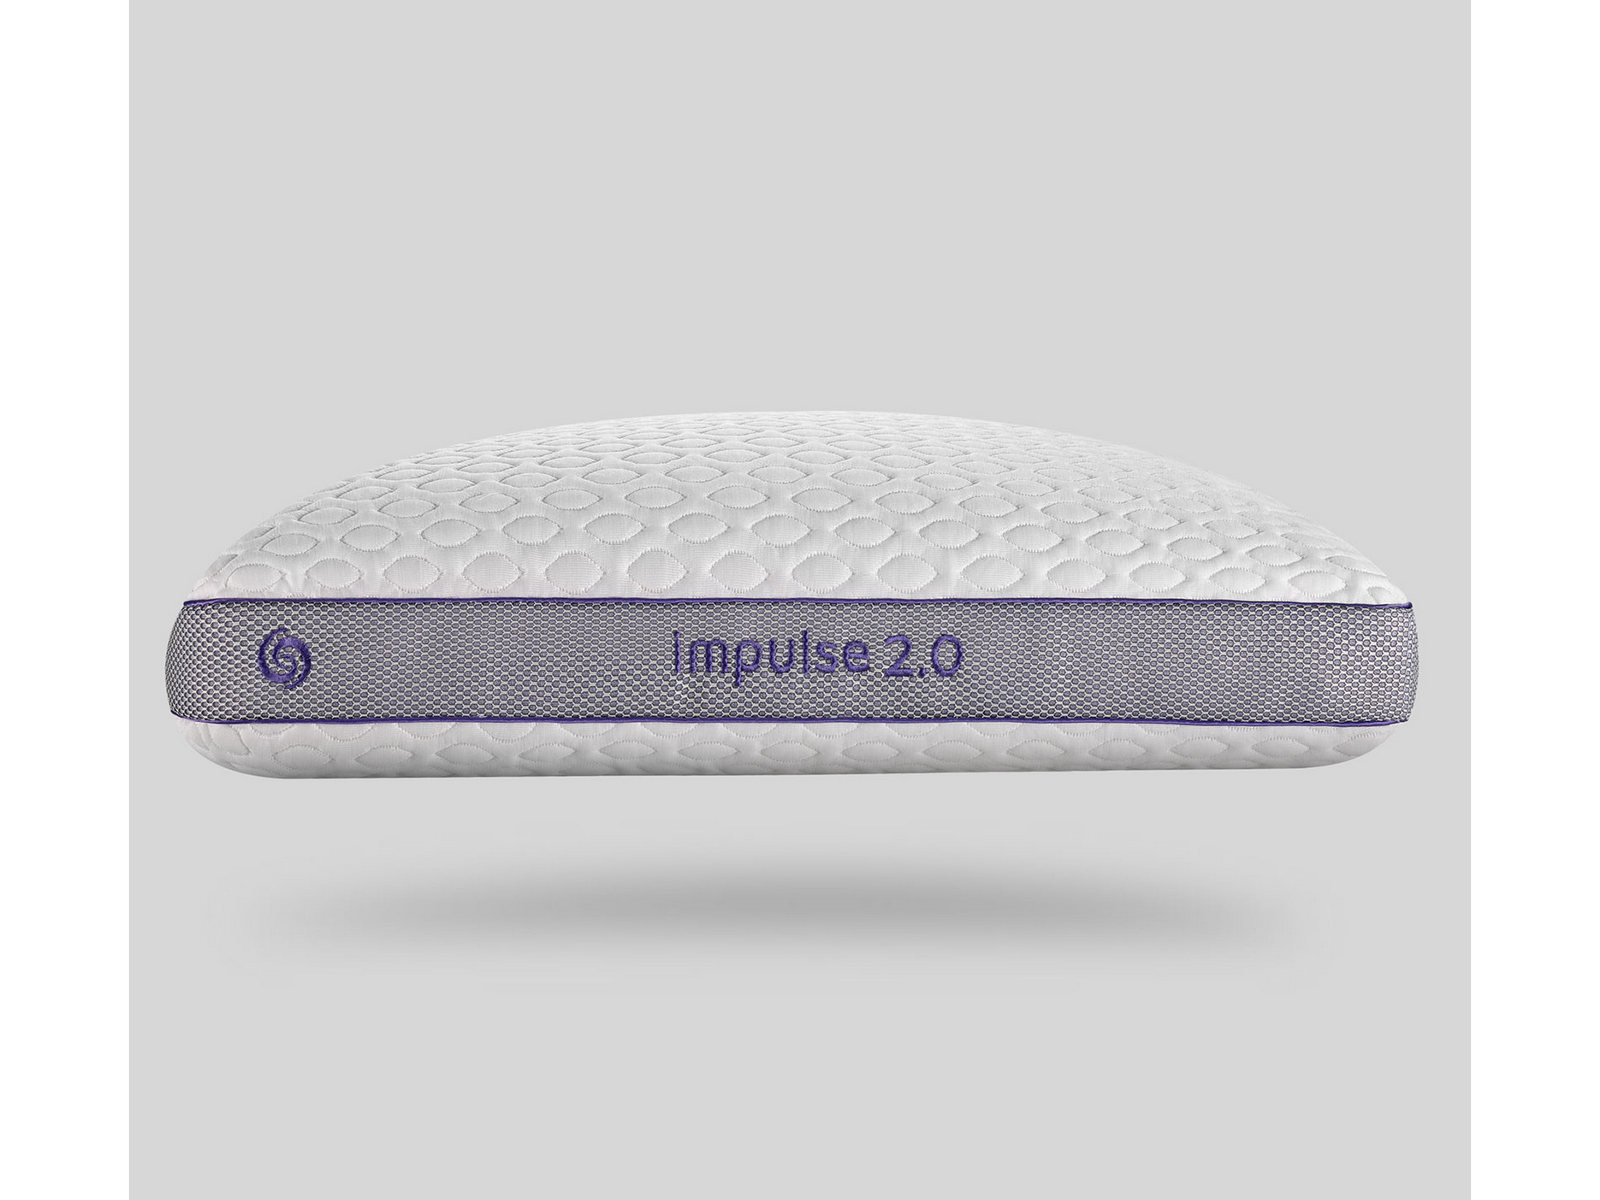 Bedgear Impulse 2.0 Pillow